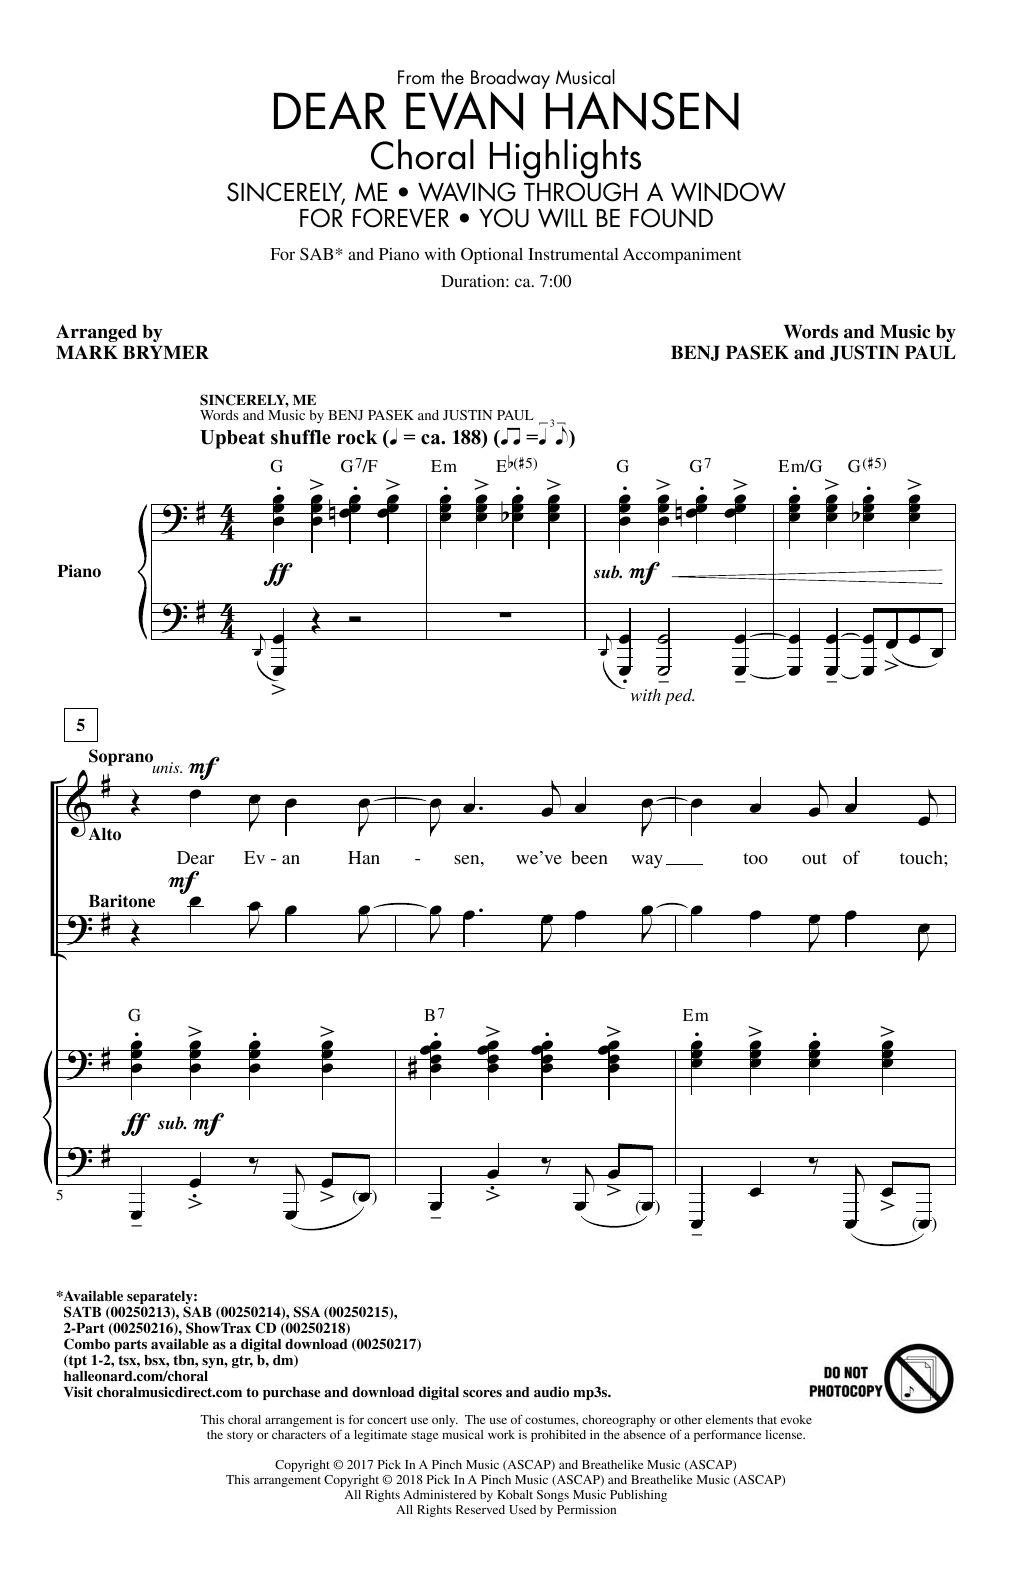 Mark Brymer Dear Evan Hansen (Choral Highlights) Sheet Music Notes & Chords for 2-Part Choir - Download or Print PDF